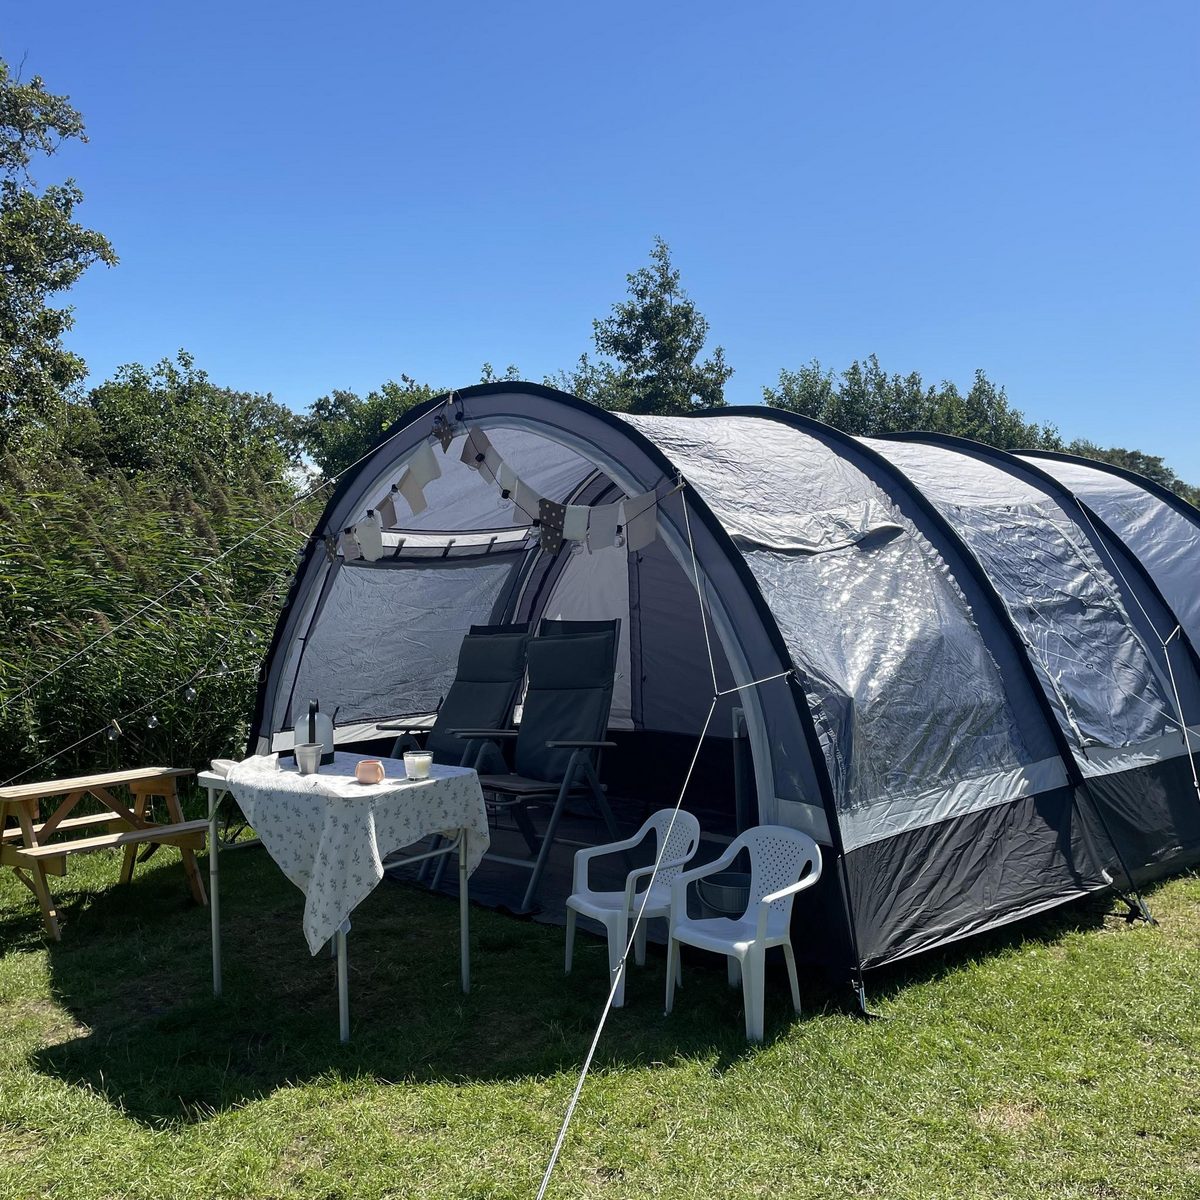 Basic camping pitch